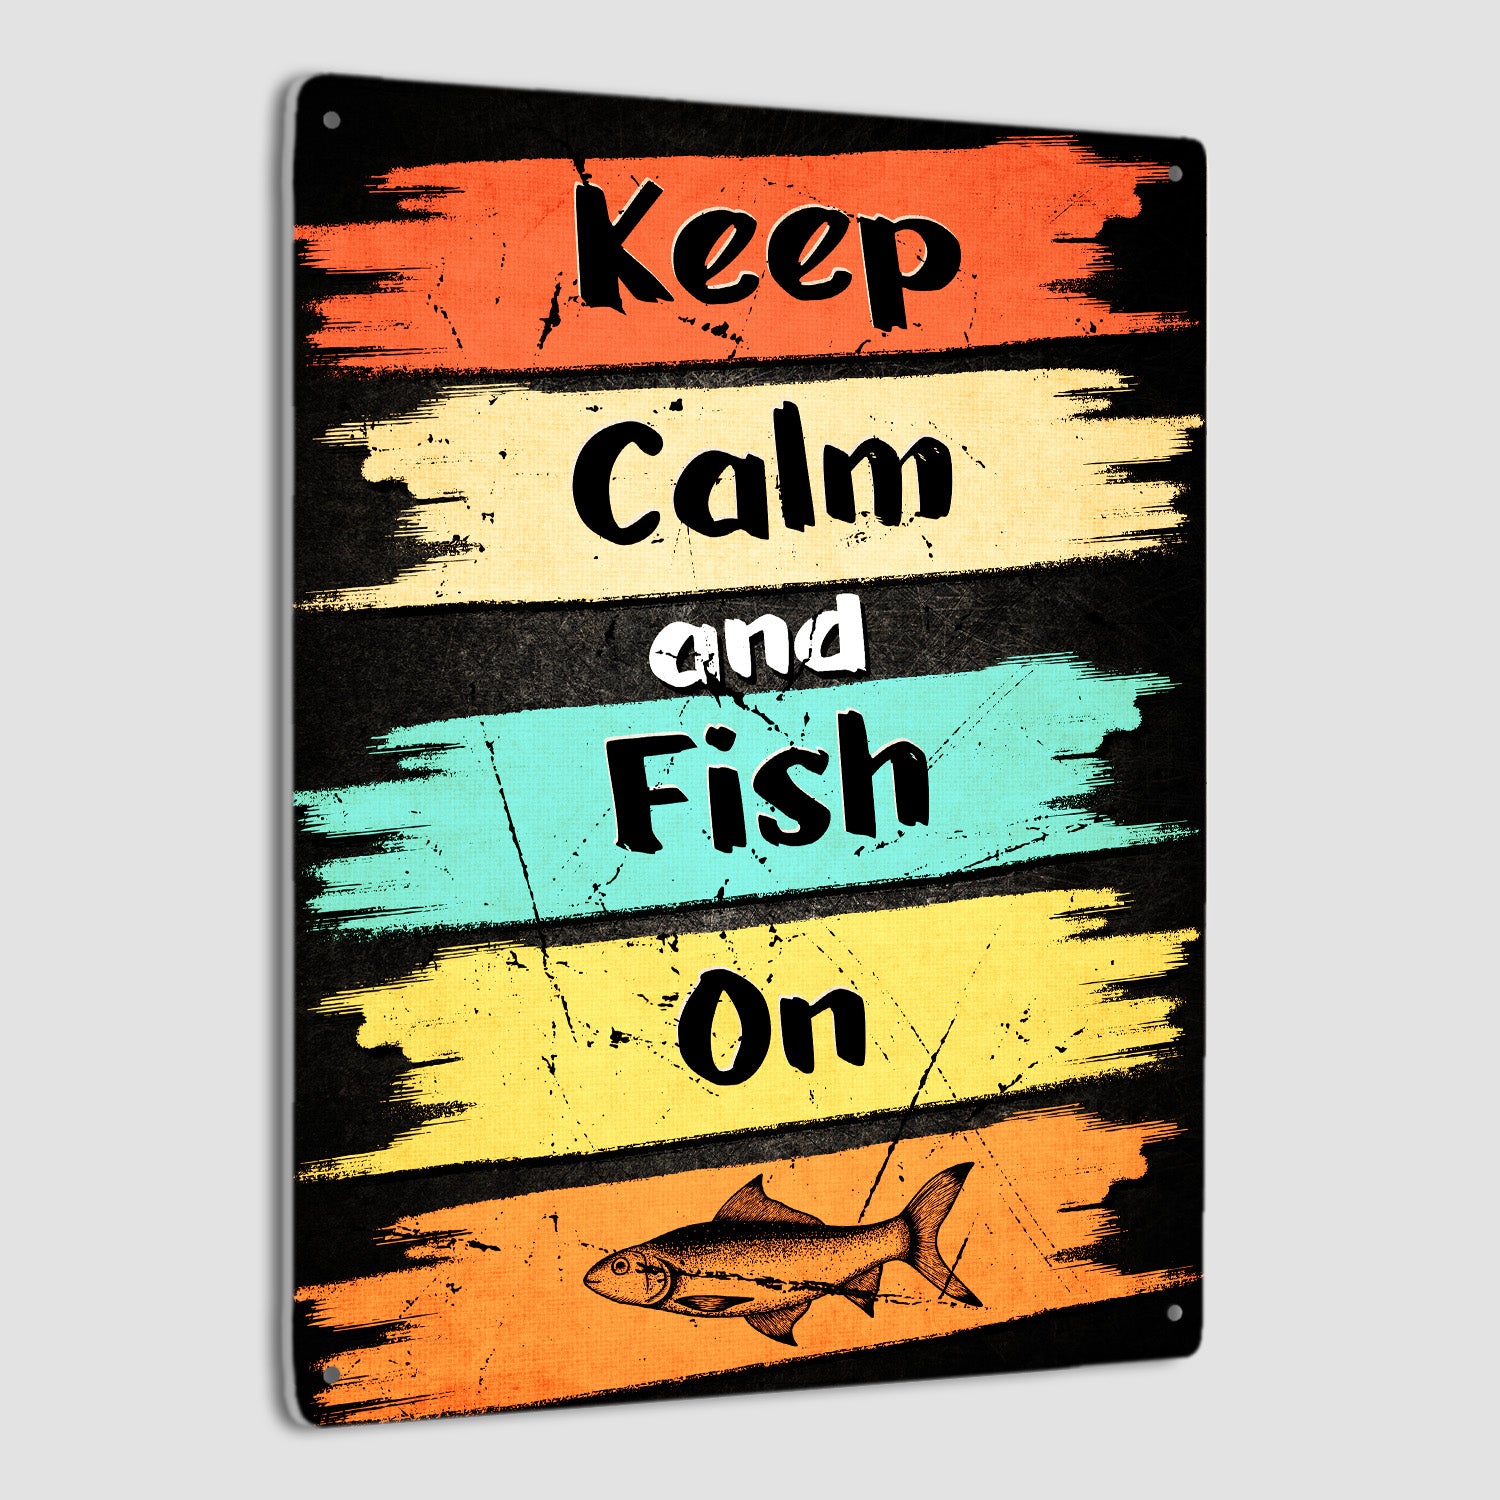 Keep Calm And Fishing On